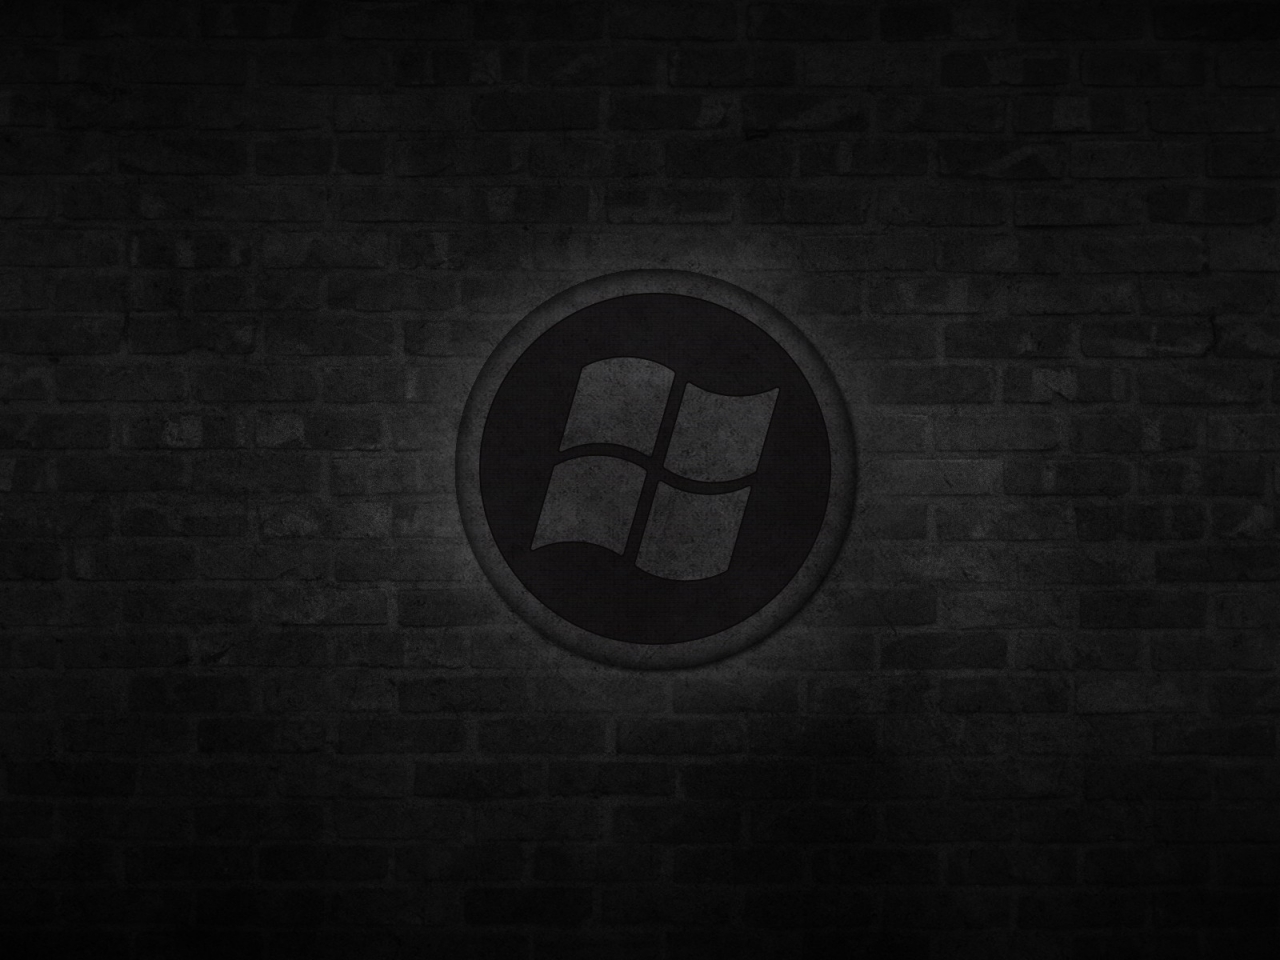 Dark Windows Logo for 1280 x 960 resolution